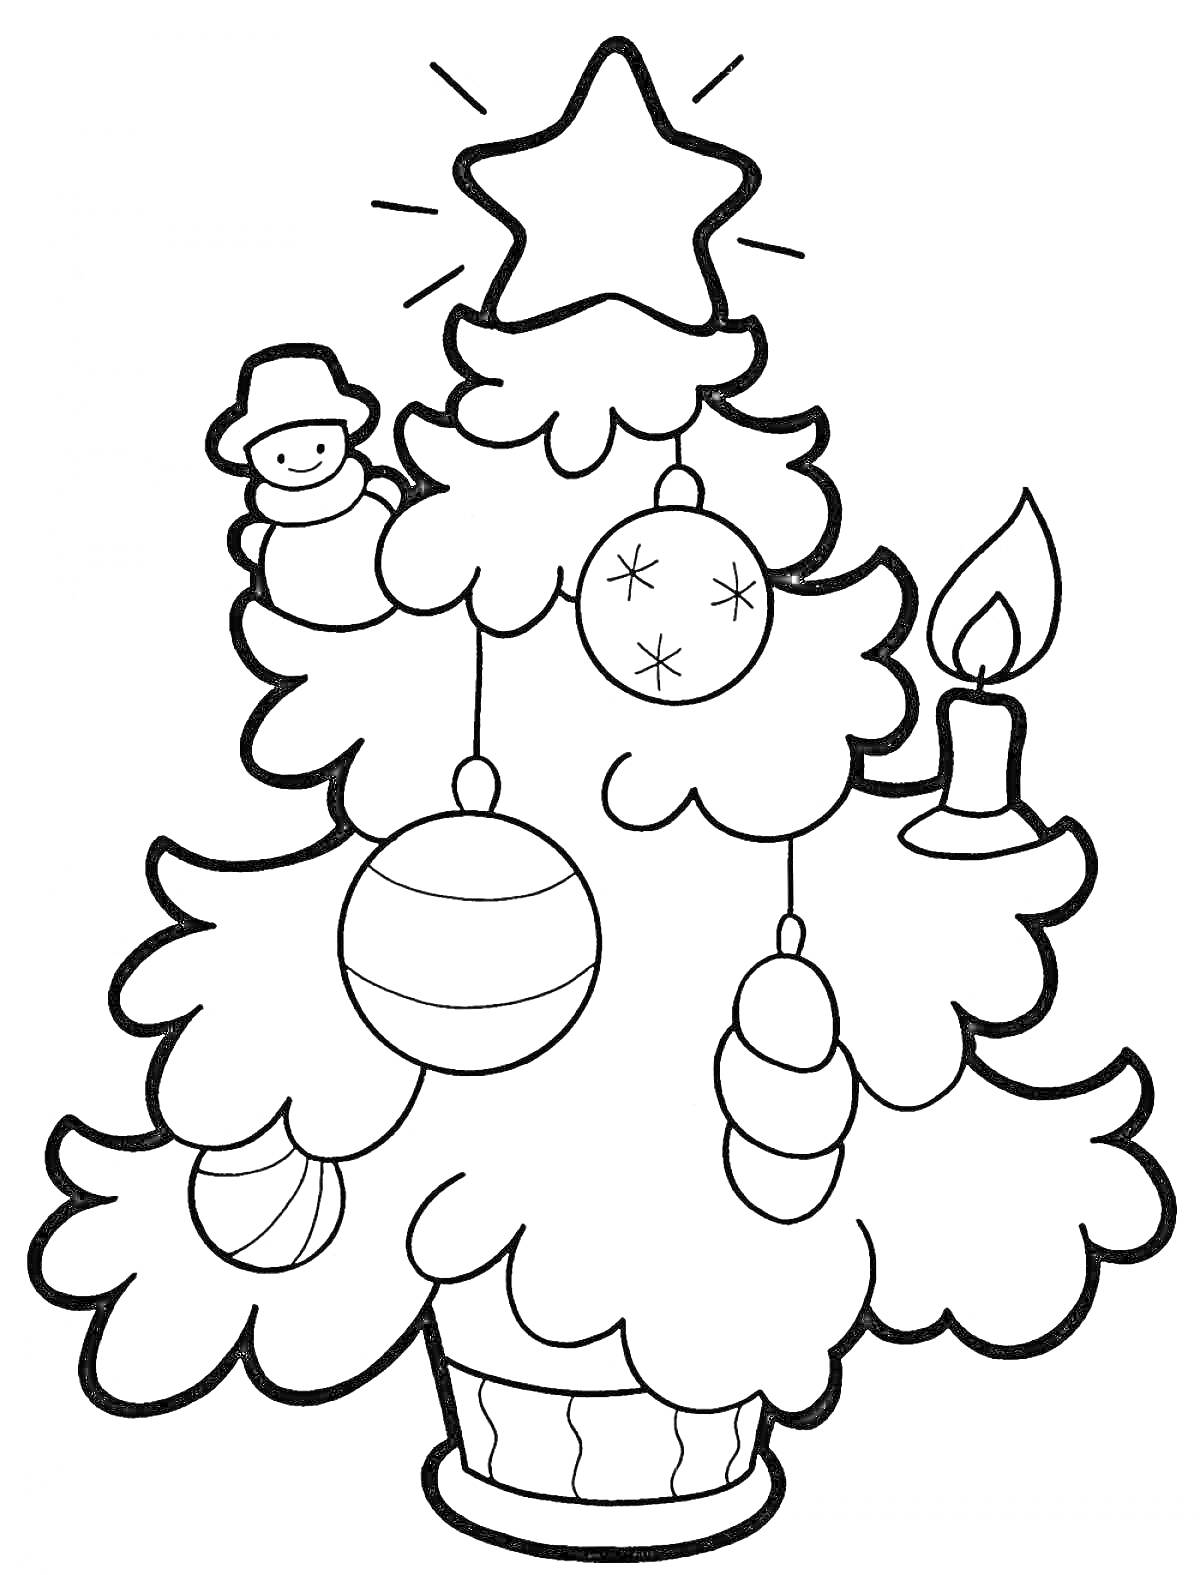 Раскраска Елка с украшениями - верхушка звезда, снеговик, шарики с узорами, свеча, и рождественские игрушки